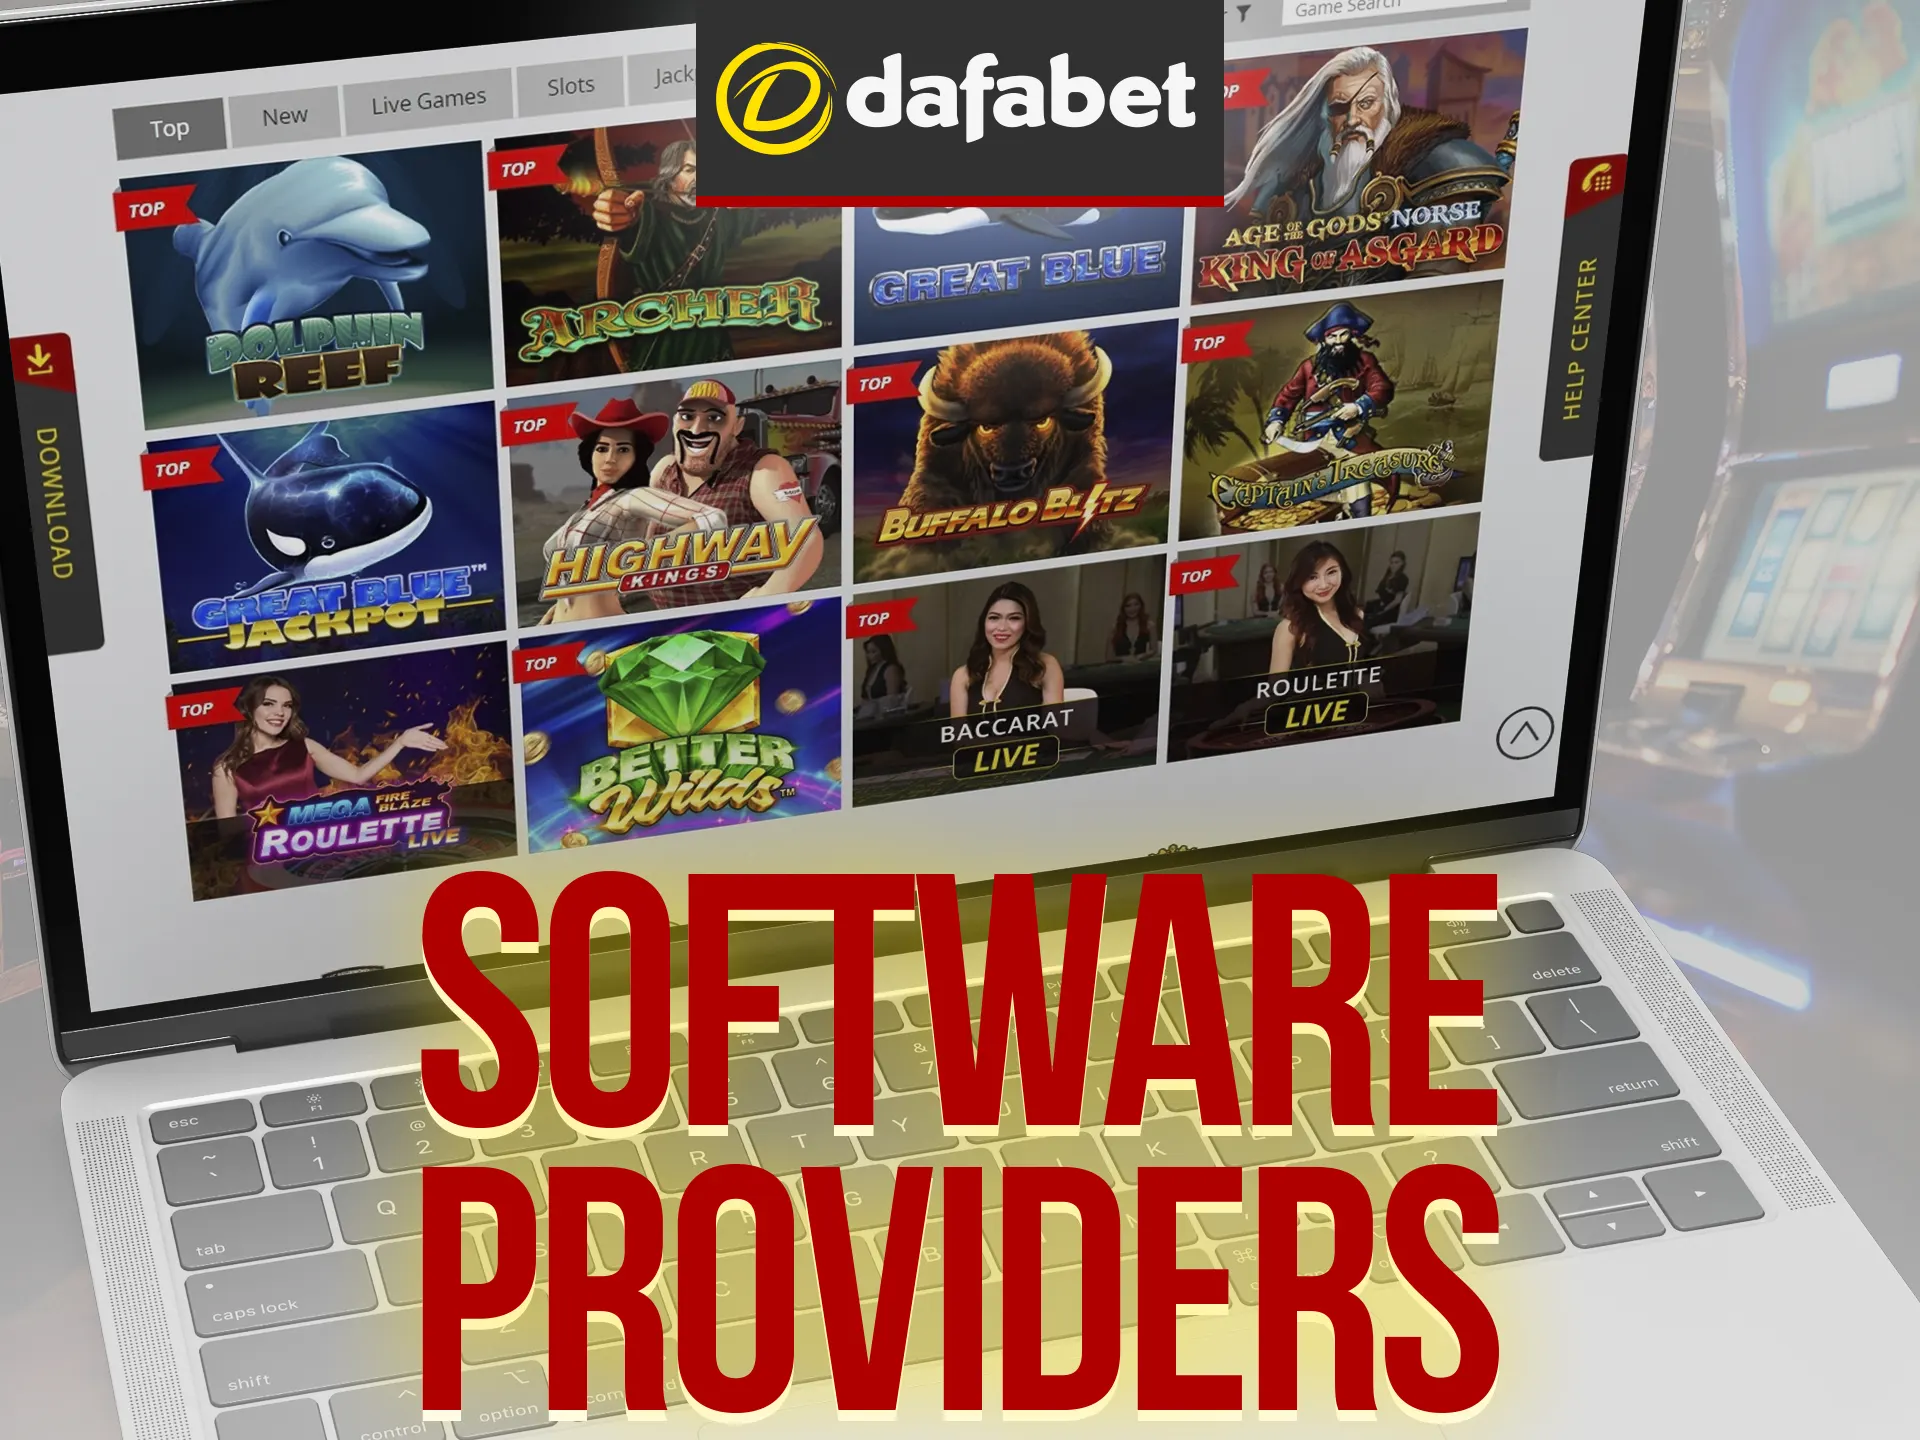 Dafabet providing slots form reputable providers like Spinmatic, Spinomenal, Thunderkick etc.